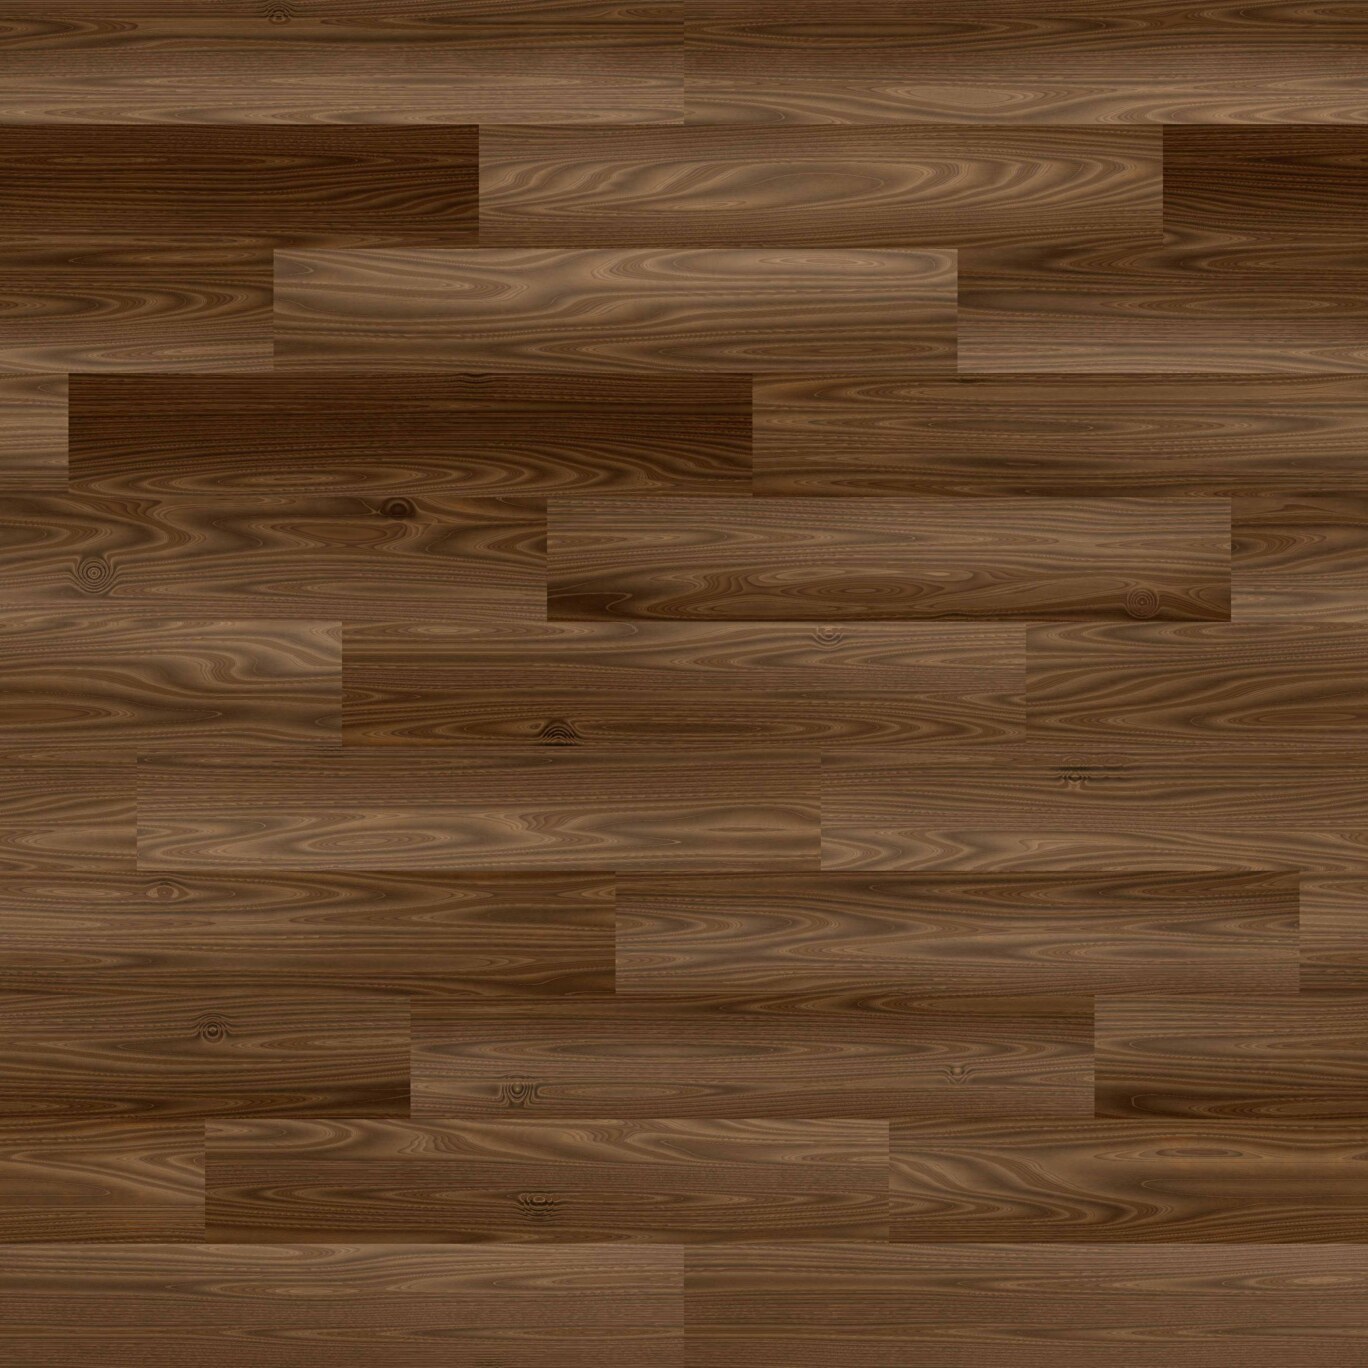 Dark Wood Floor Parquet seamless PBR 3D Texture High Resolution Free  Download 4k - Free 3d textures HD